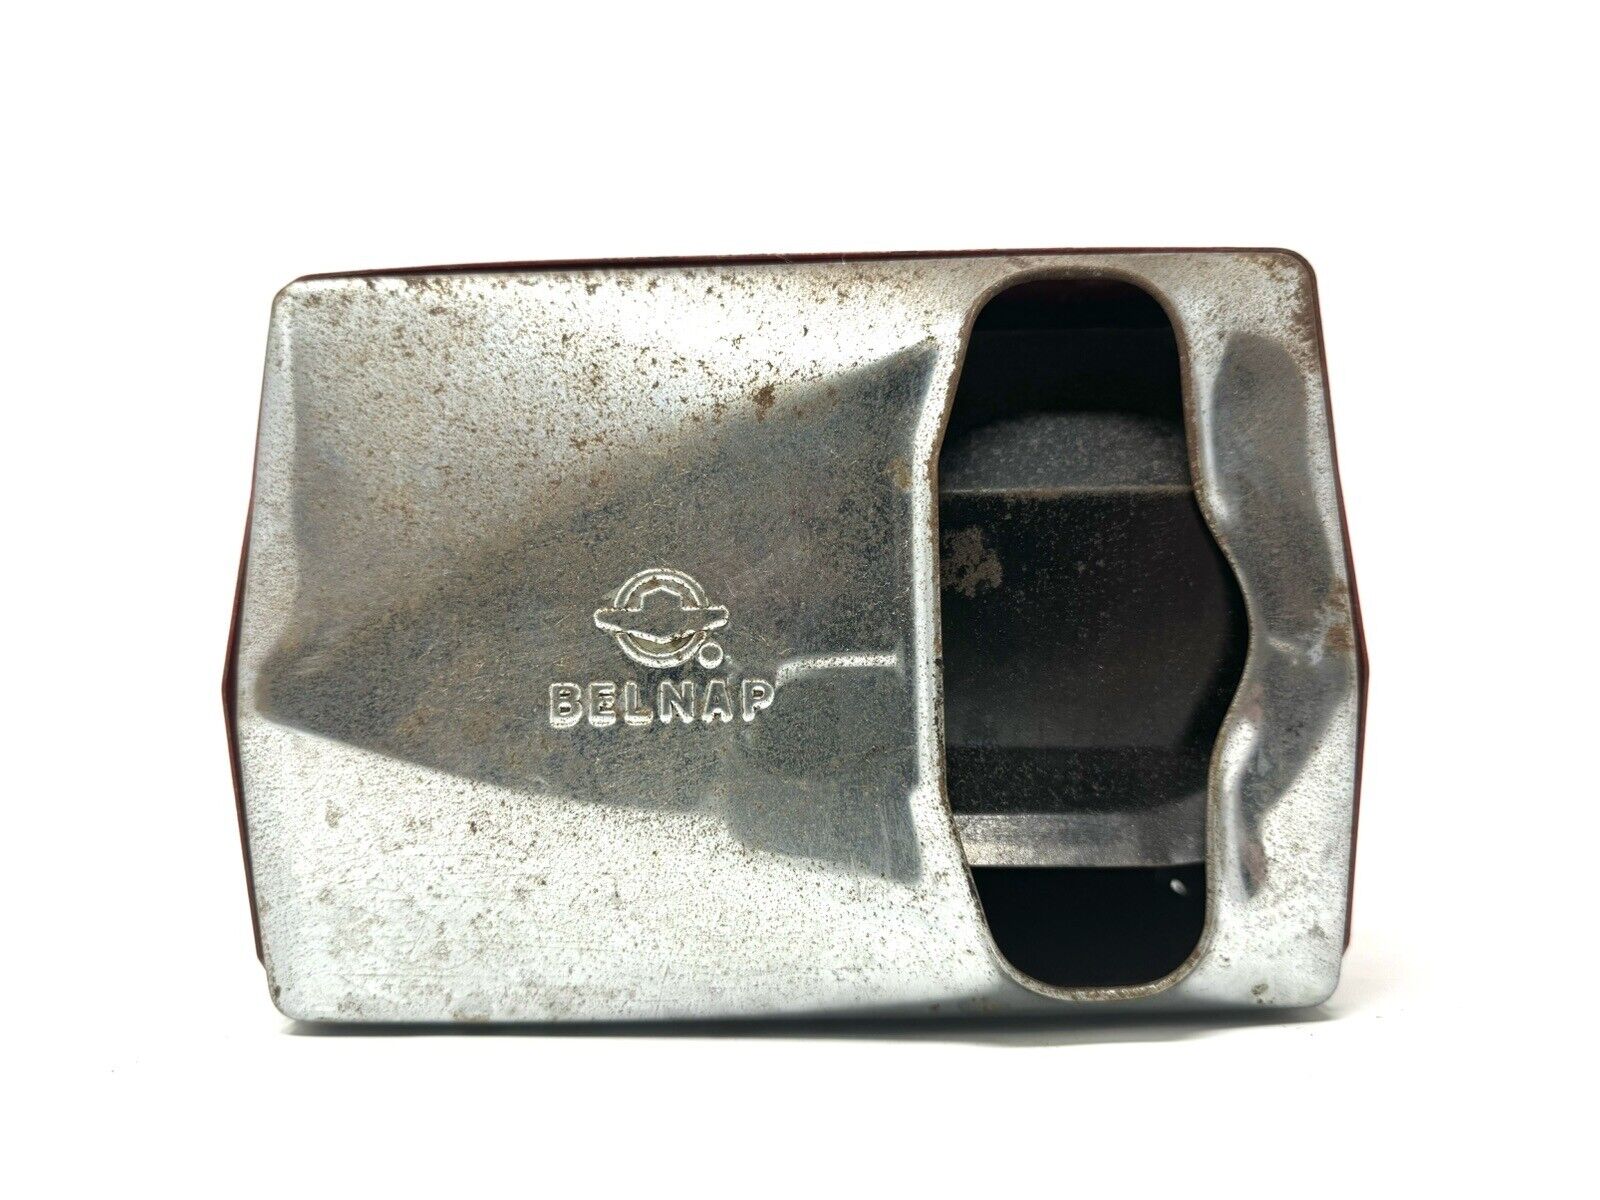 BELNAP Double Sided Chrome Diner Napkin Dispenser Retro Vintage Silver / Red